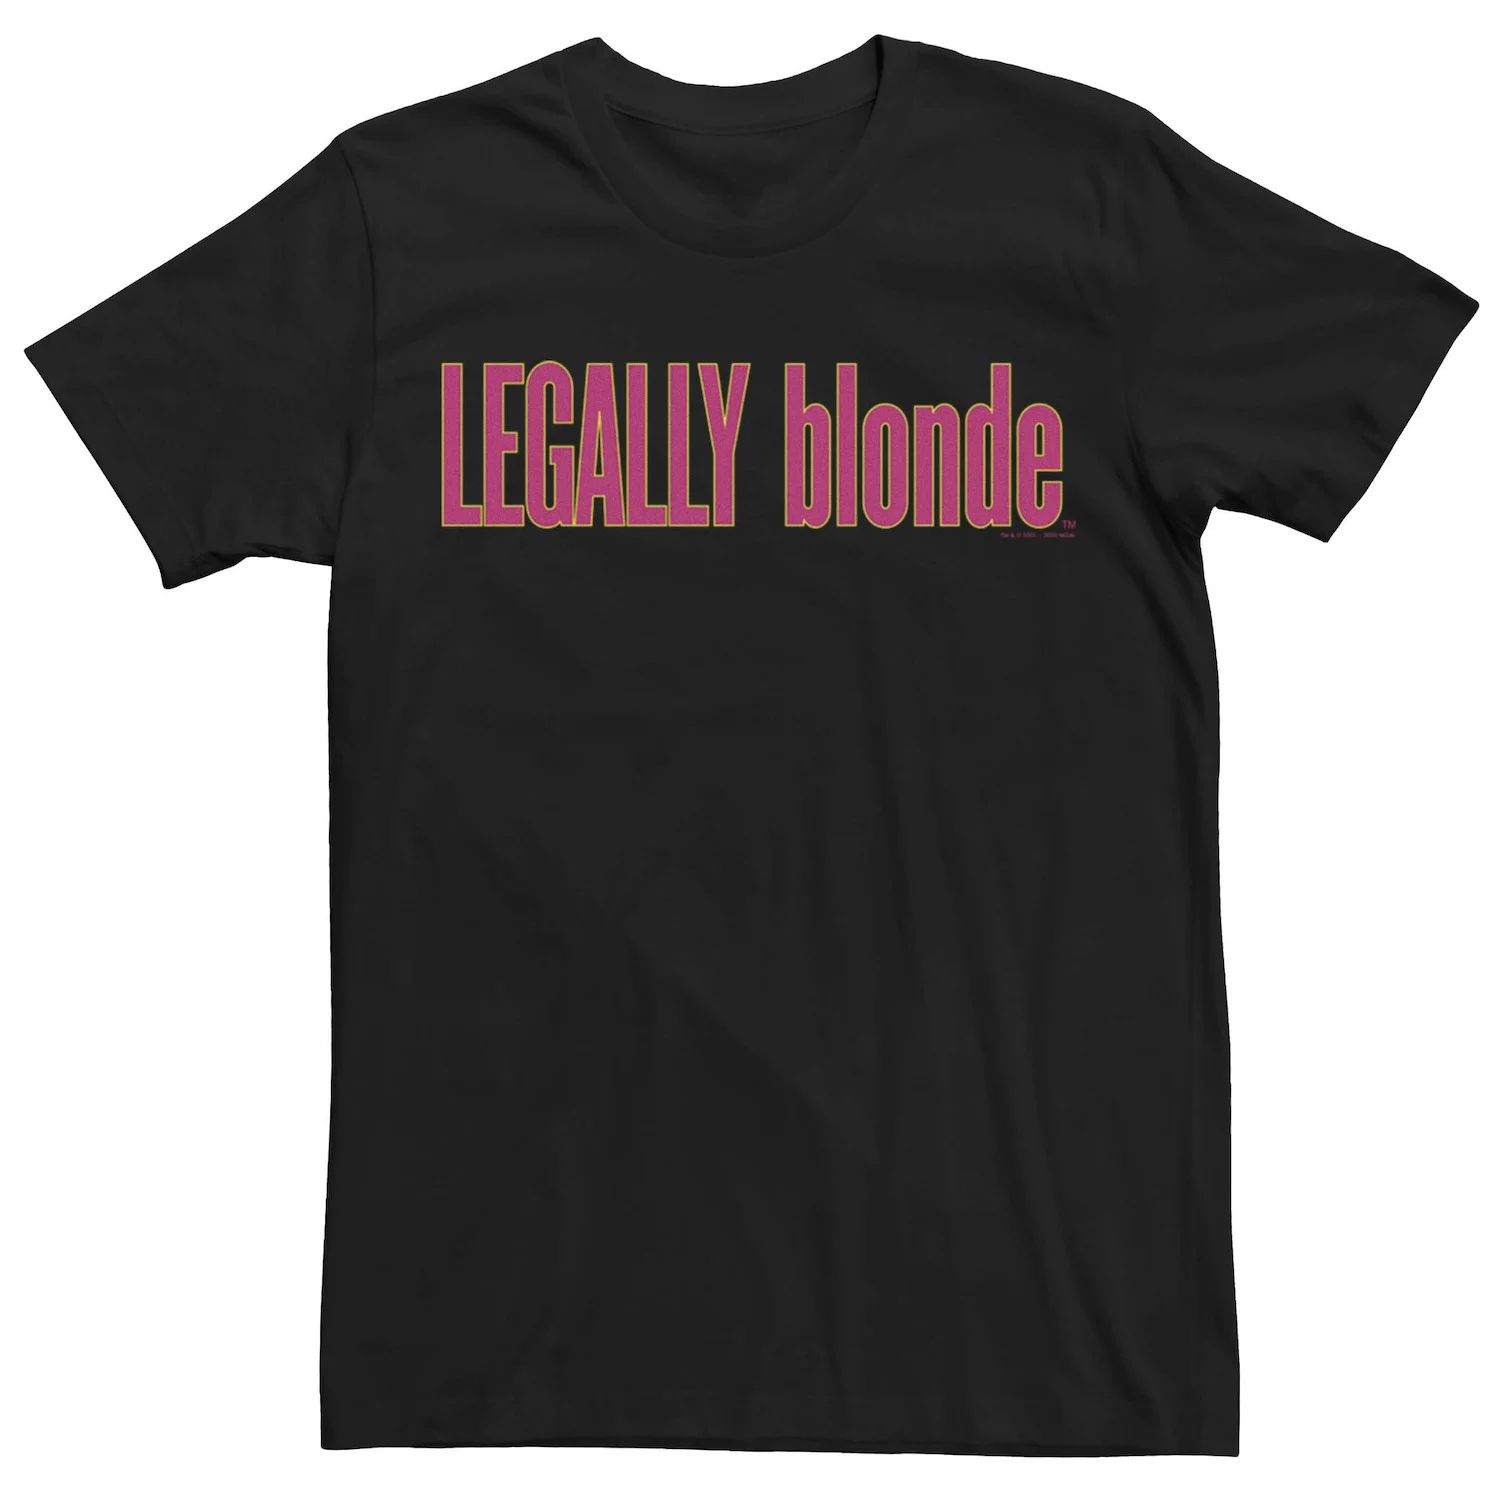 Мужская футболка с логотипом Legally Blonde Licensed Character